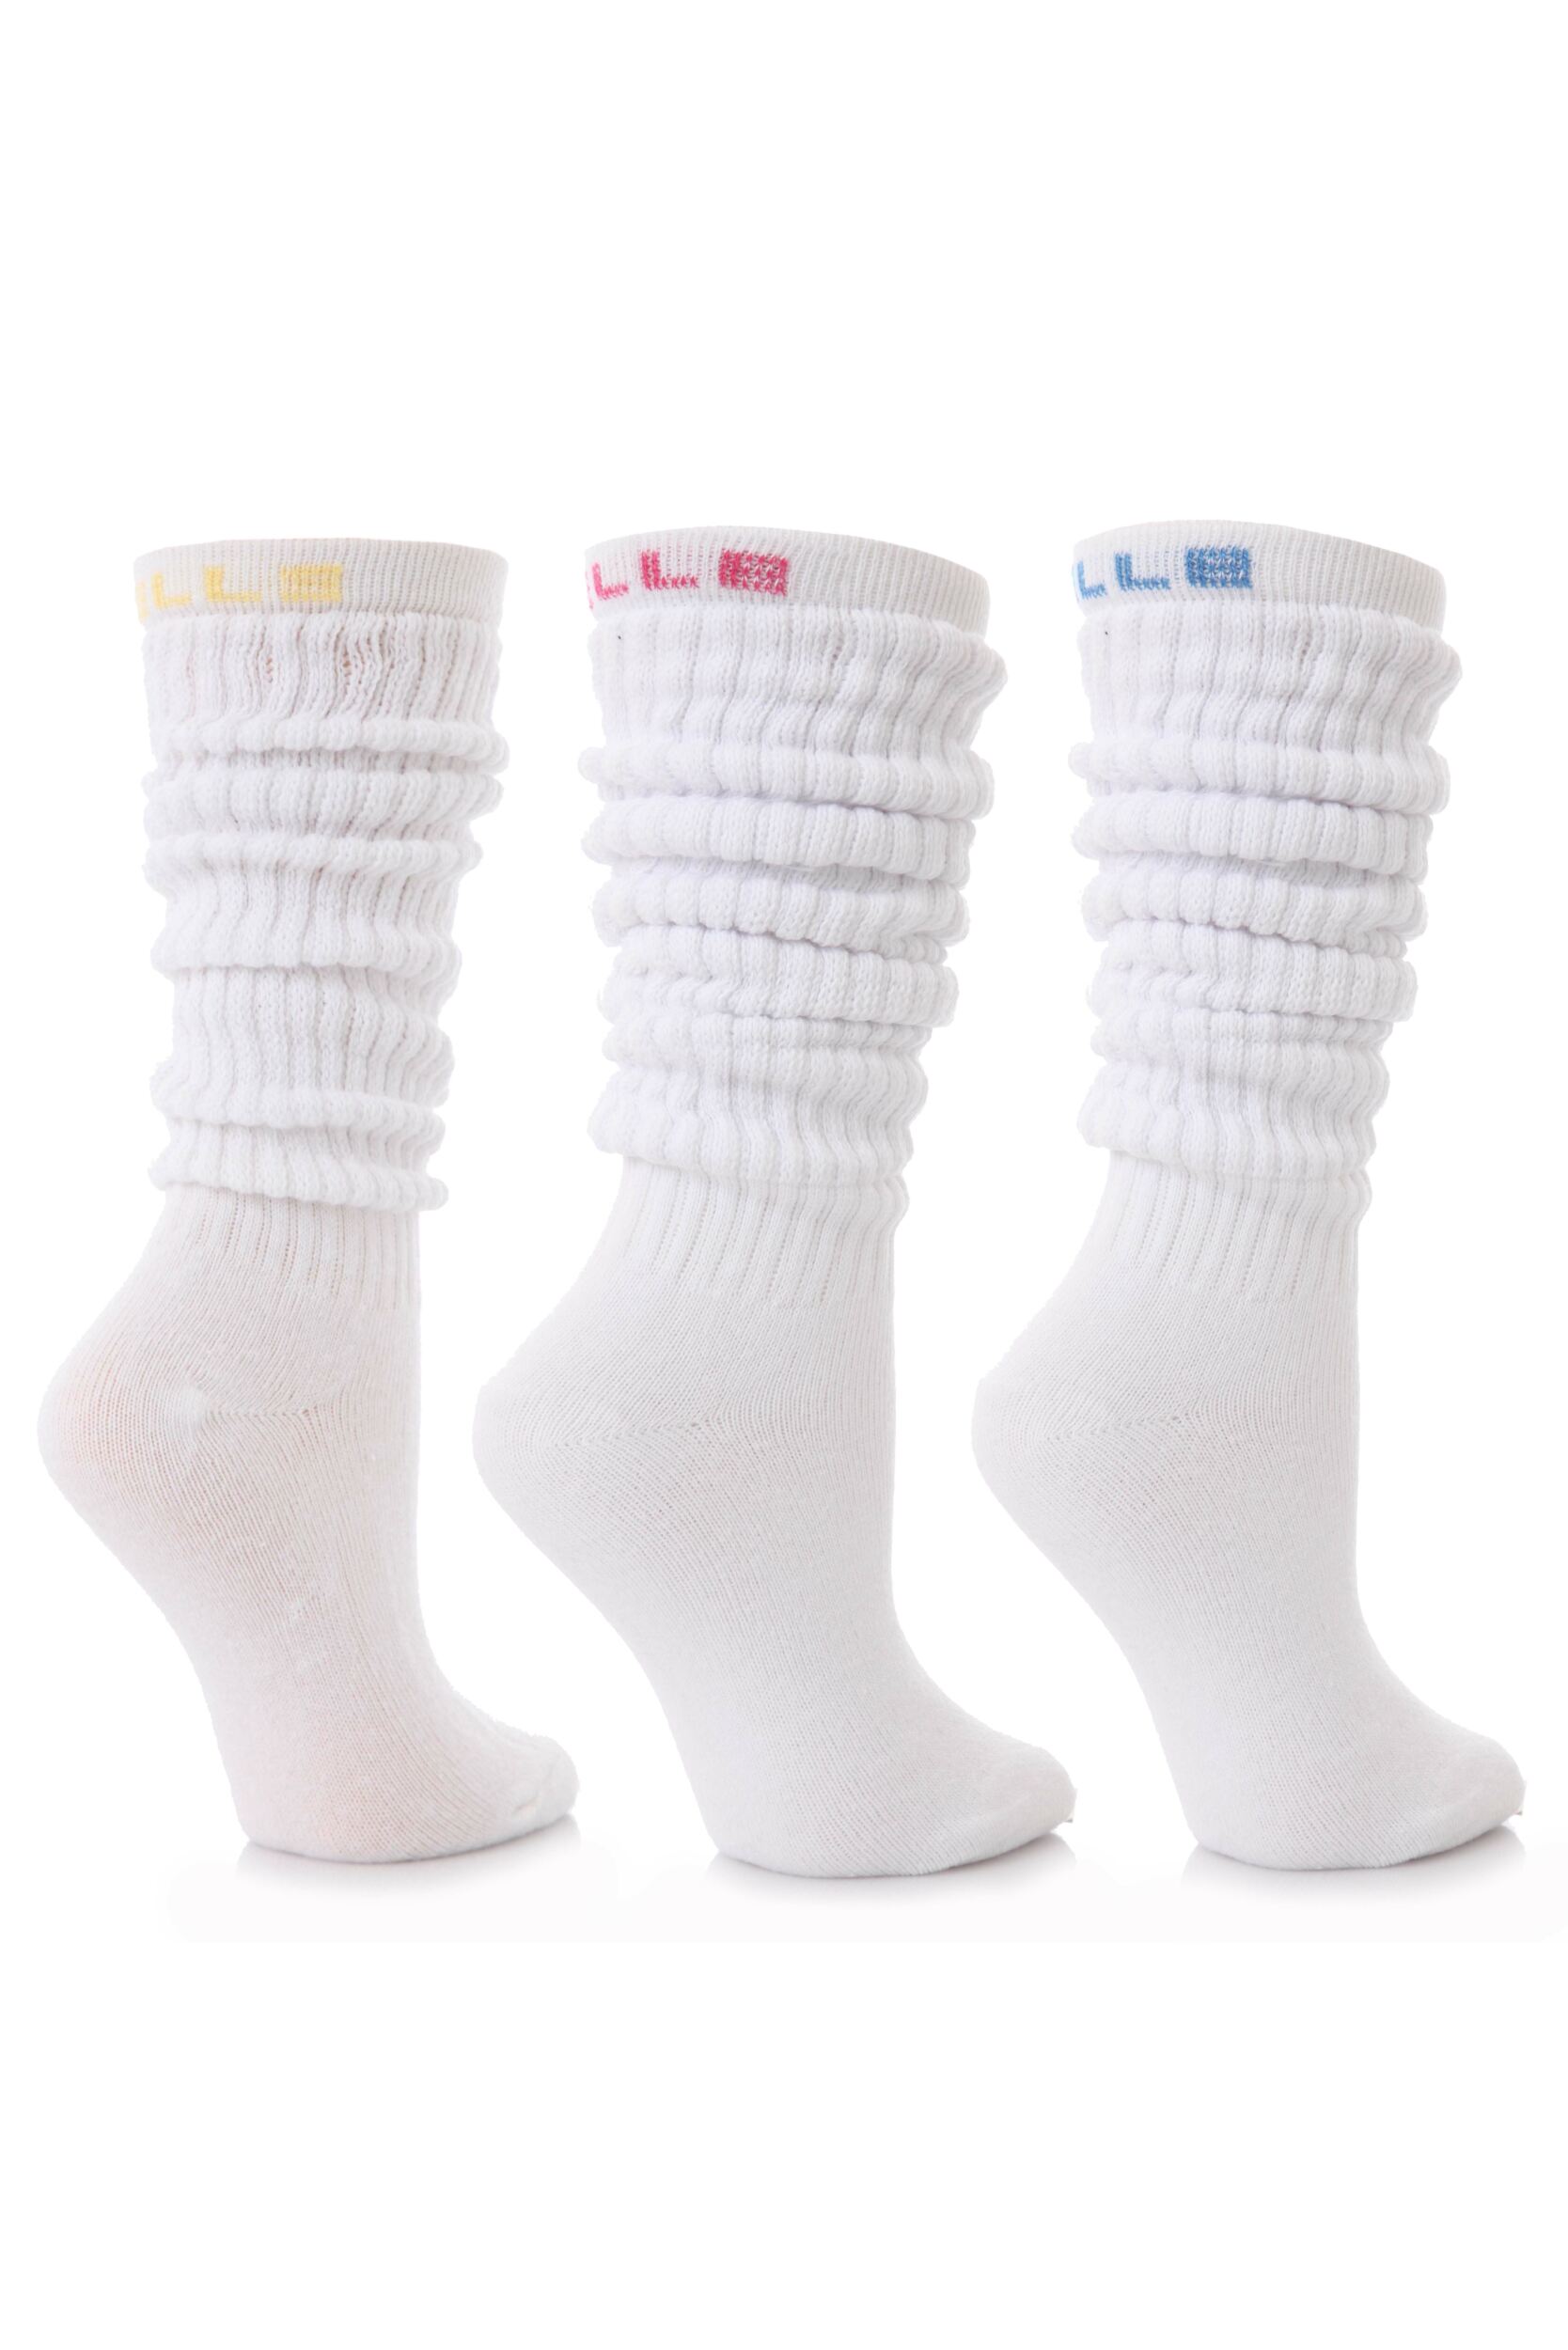 Ladies 3 Pair Elle White Cotton Slouch Socks 4-8 | eBay